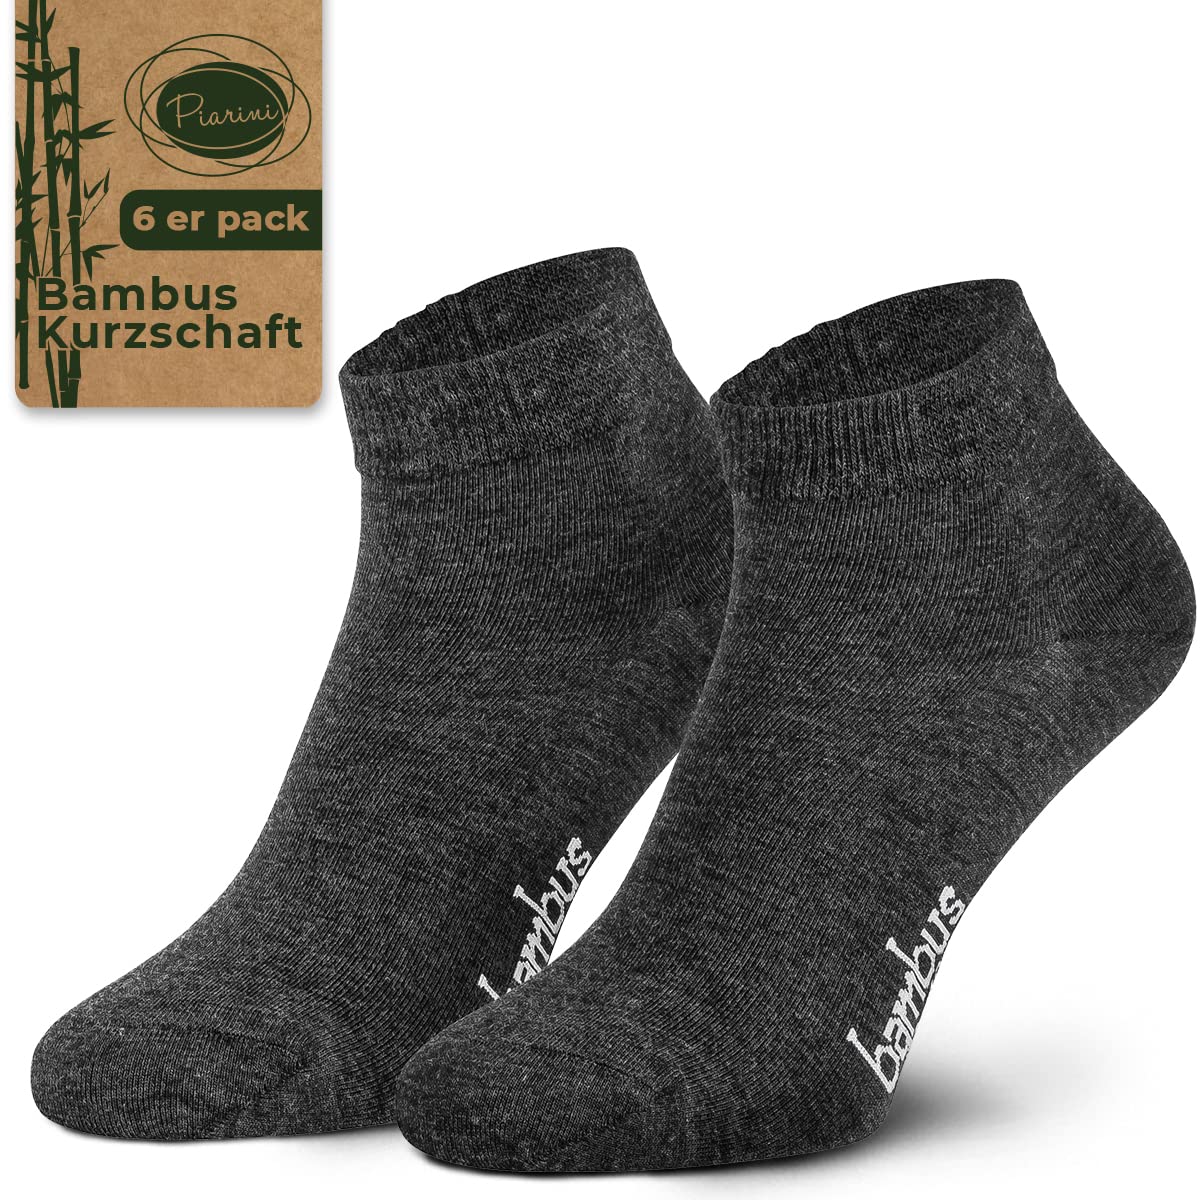 Piarini Gr. 47-50 6 Paar Bambussocken Herren-Socken kurz anthrazit grau